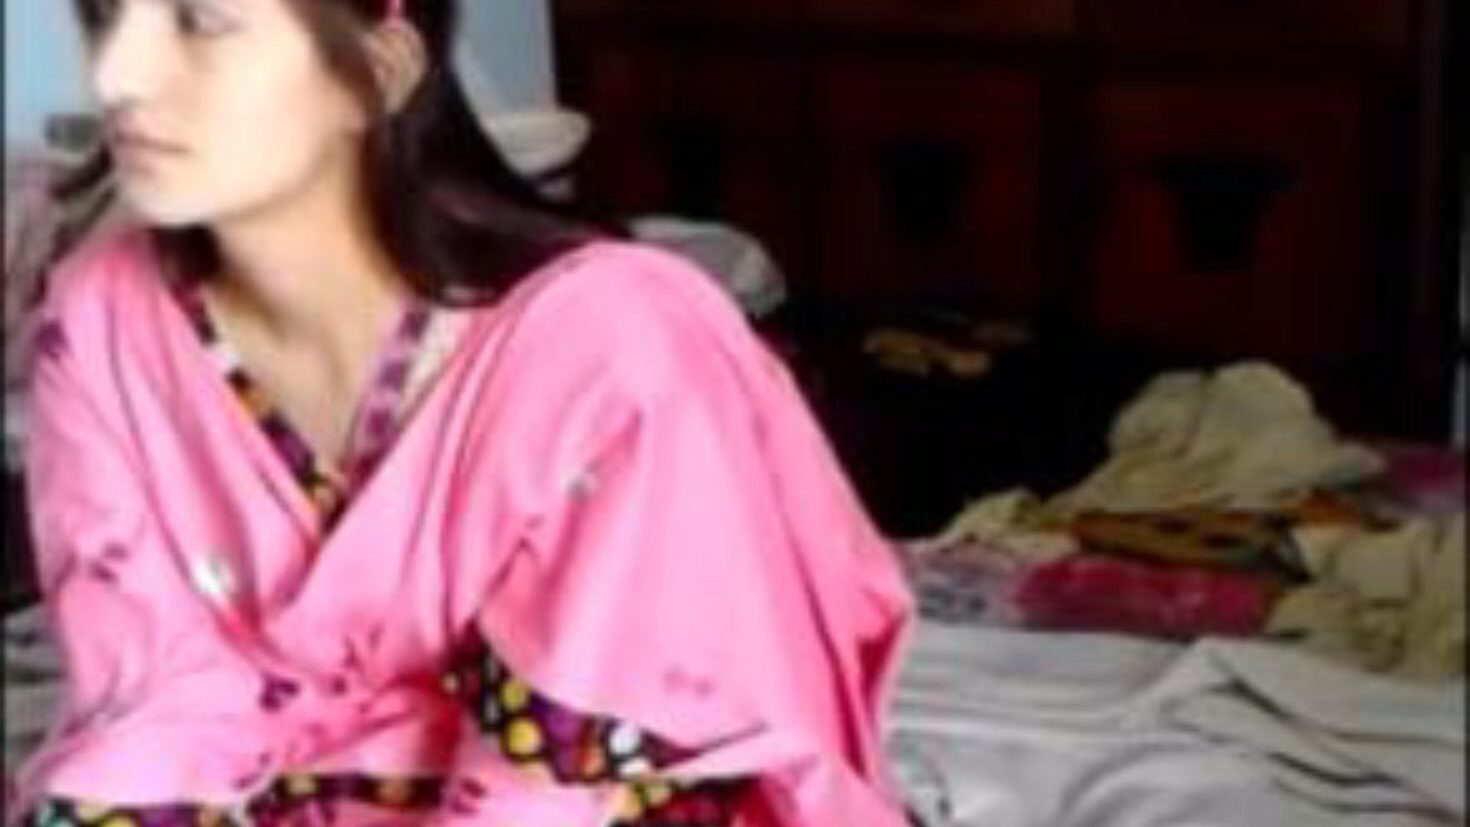 desi video: δωρεάν ινδική & cfnm πορνό βίντεο 55 - xhamster παρακολουθήστε desi video tube orgy κλιπ δωρεάν στο xhamster, με τη μεγαλύτερη ποικιλία ινδικών cfnm, βάναυσου σεξ και ακολουθιών πορνό κλιπ cumshot